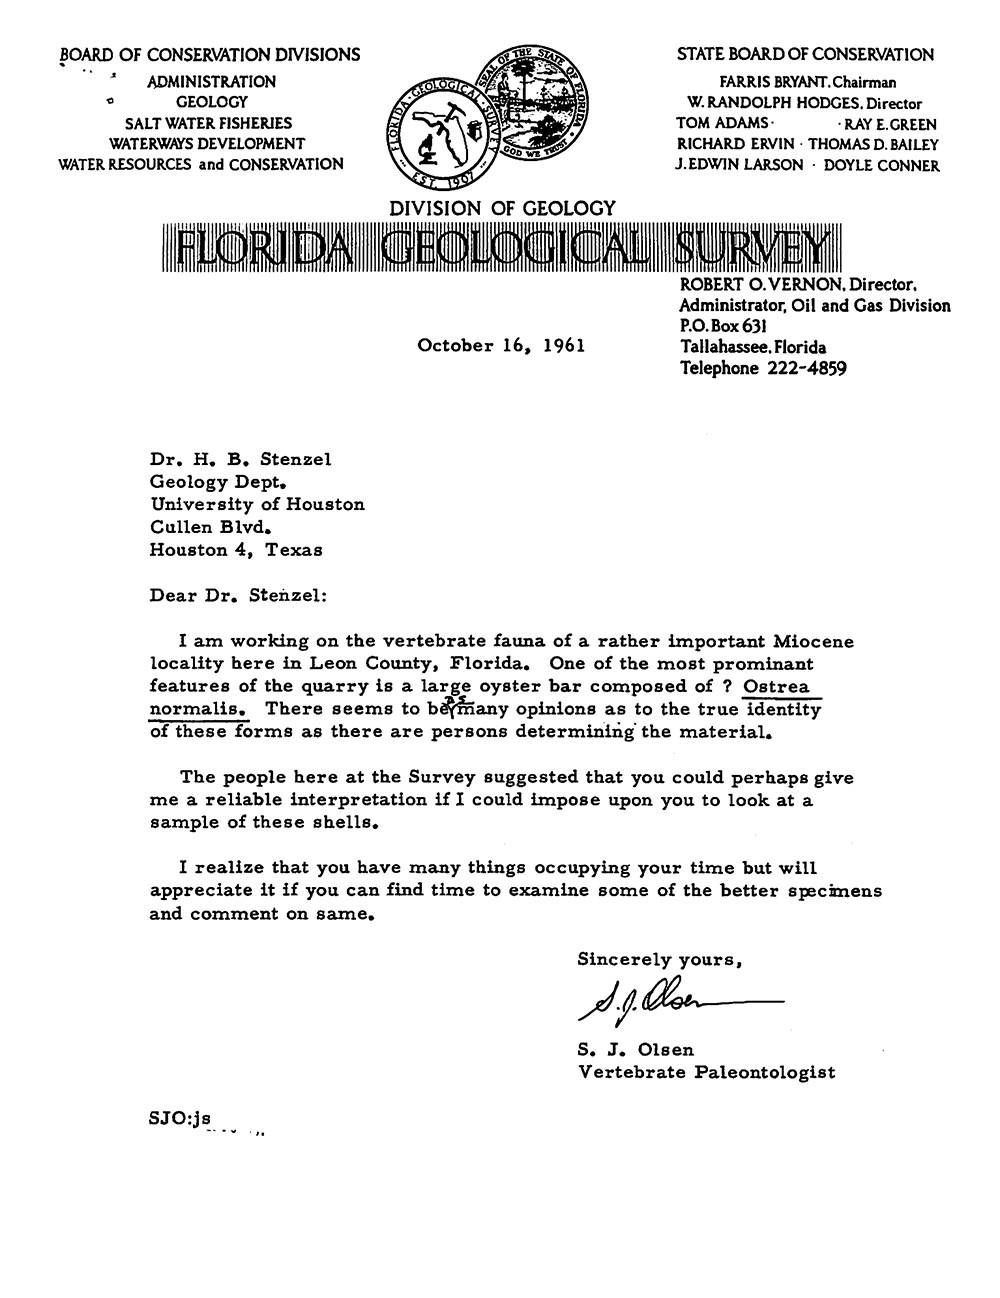 Letter to H.B. Stenzel from S.J. Olsen on 1961-10-16.